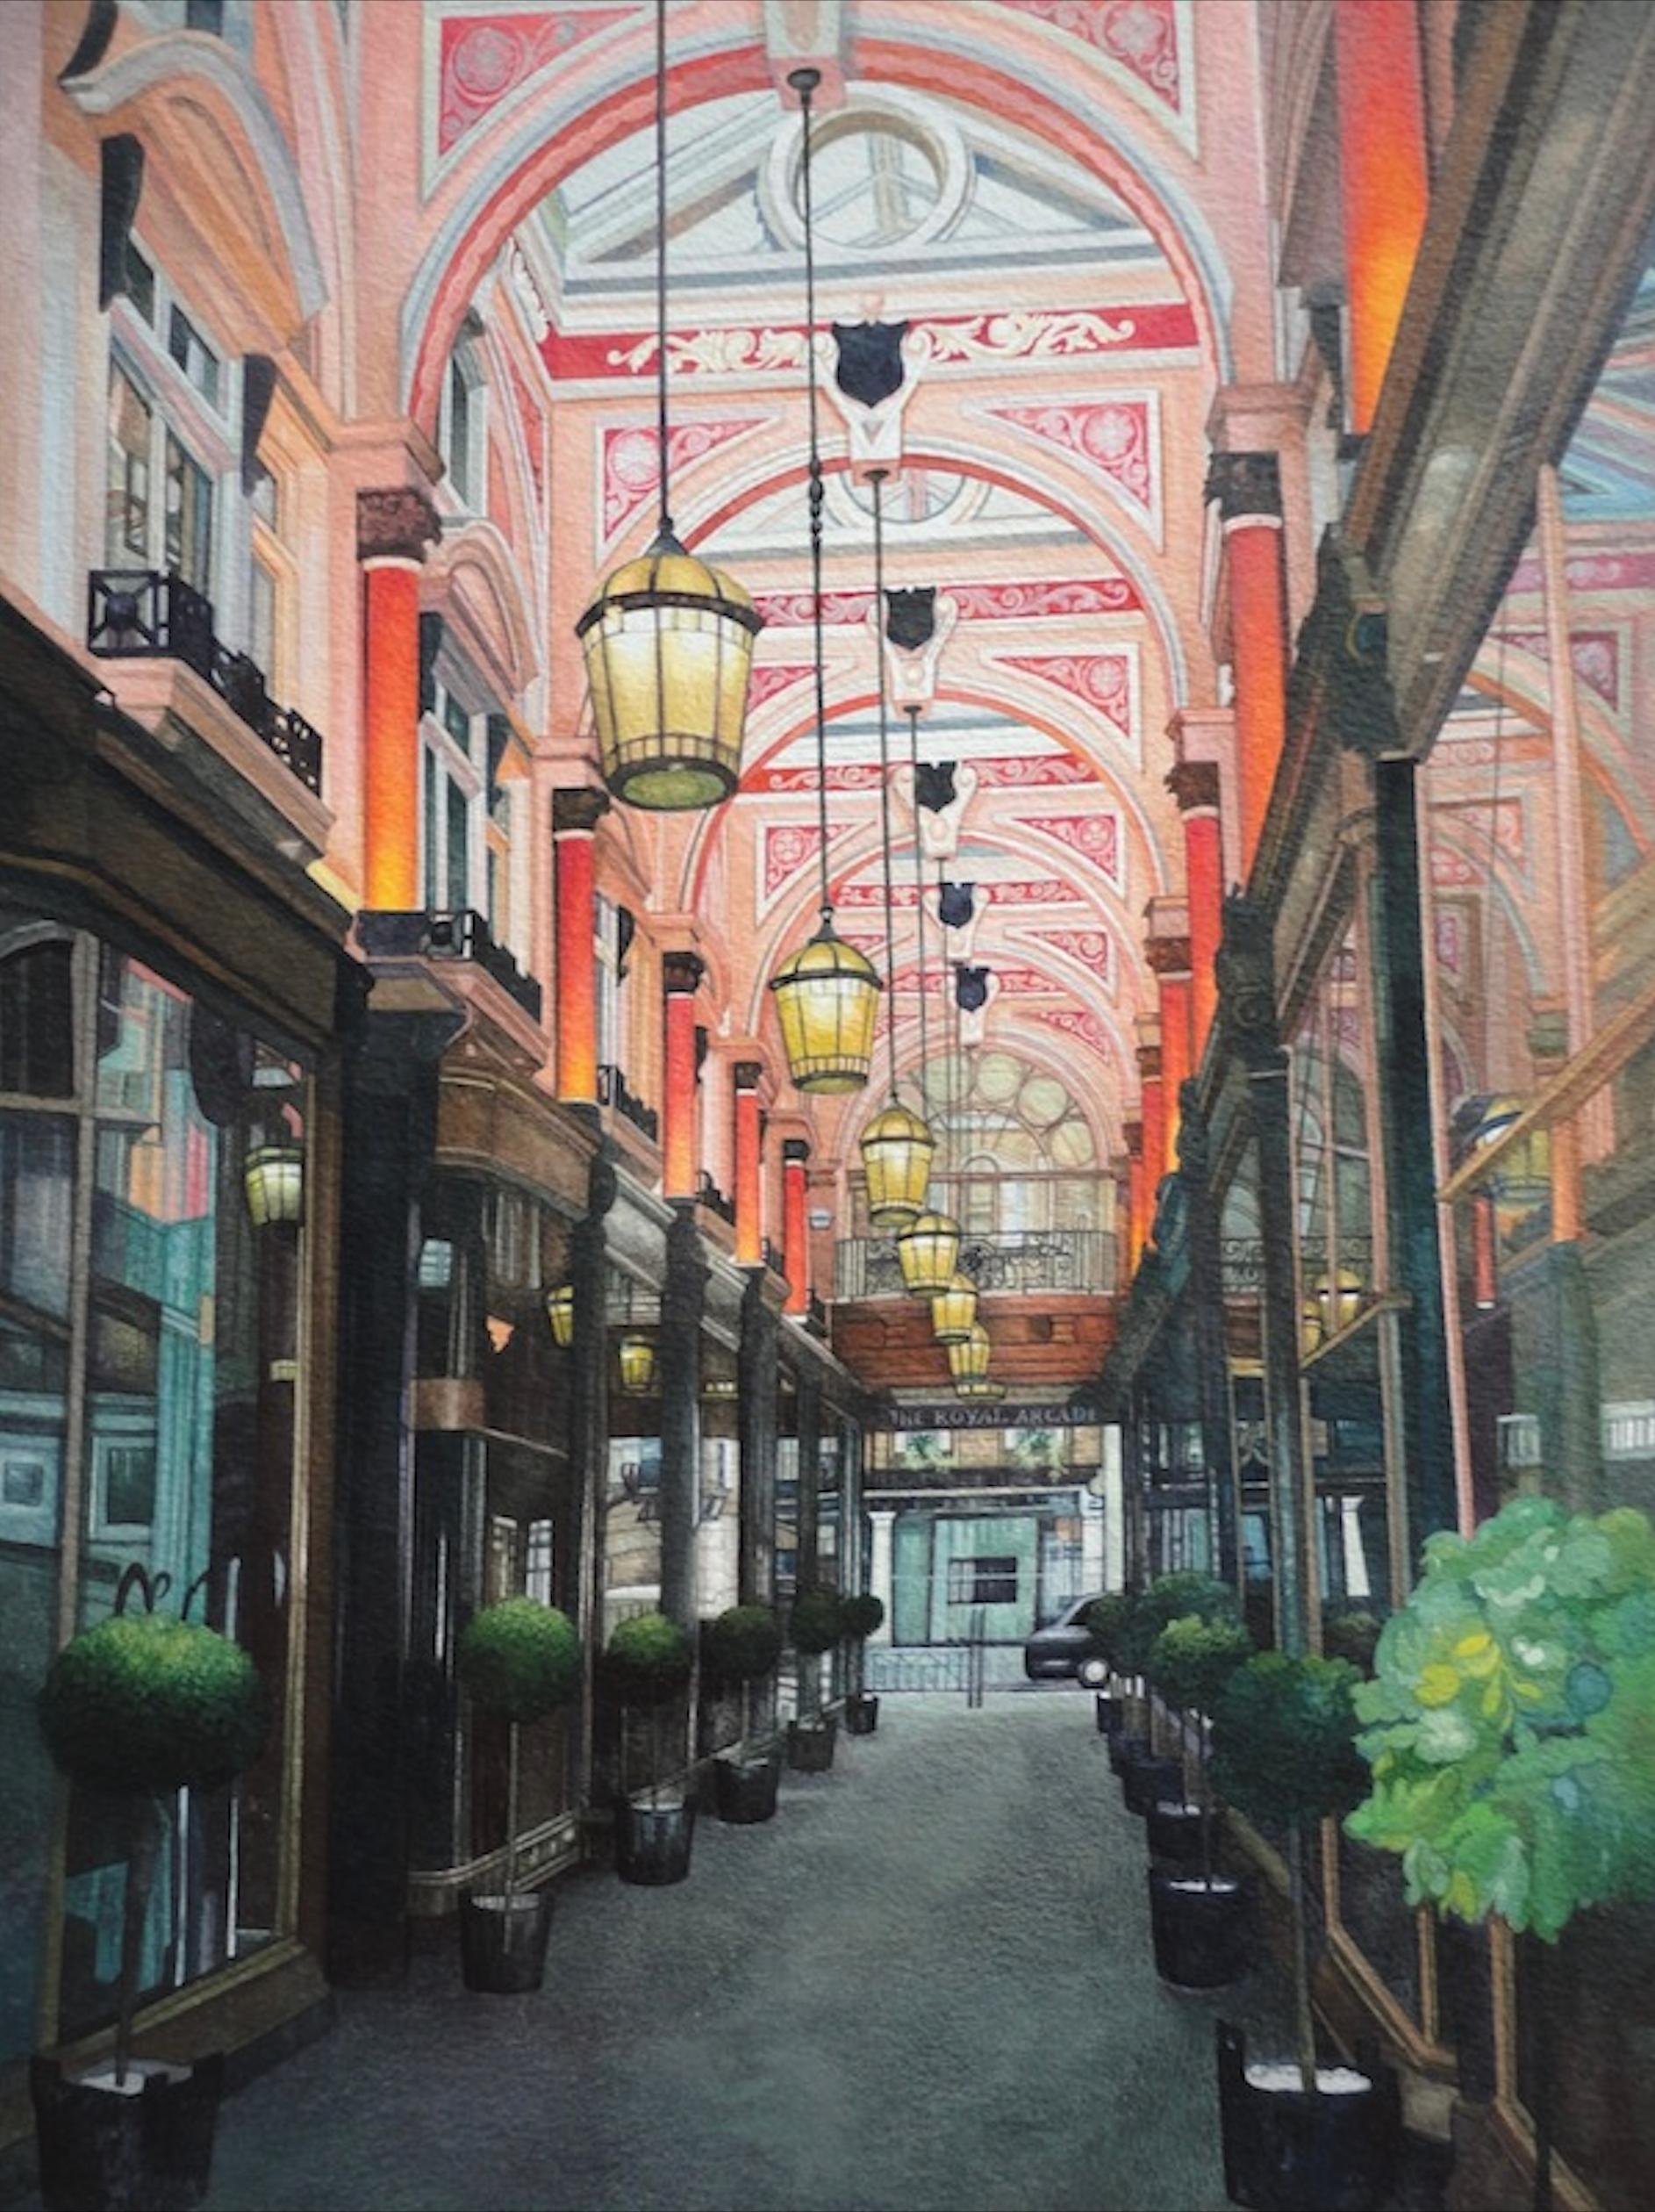 Elena Baranoff Landscape Art - The Royal Arcade, A Stylish Victorian London Connection